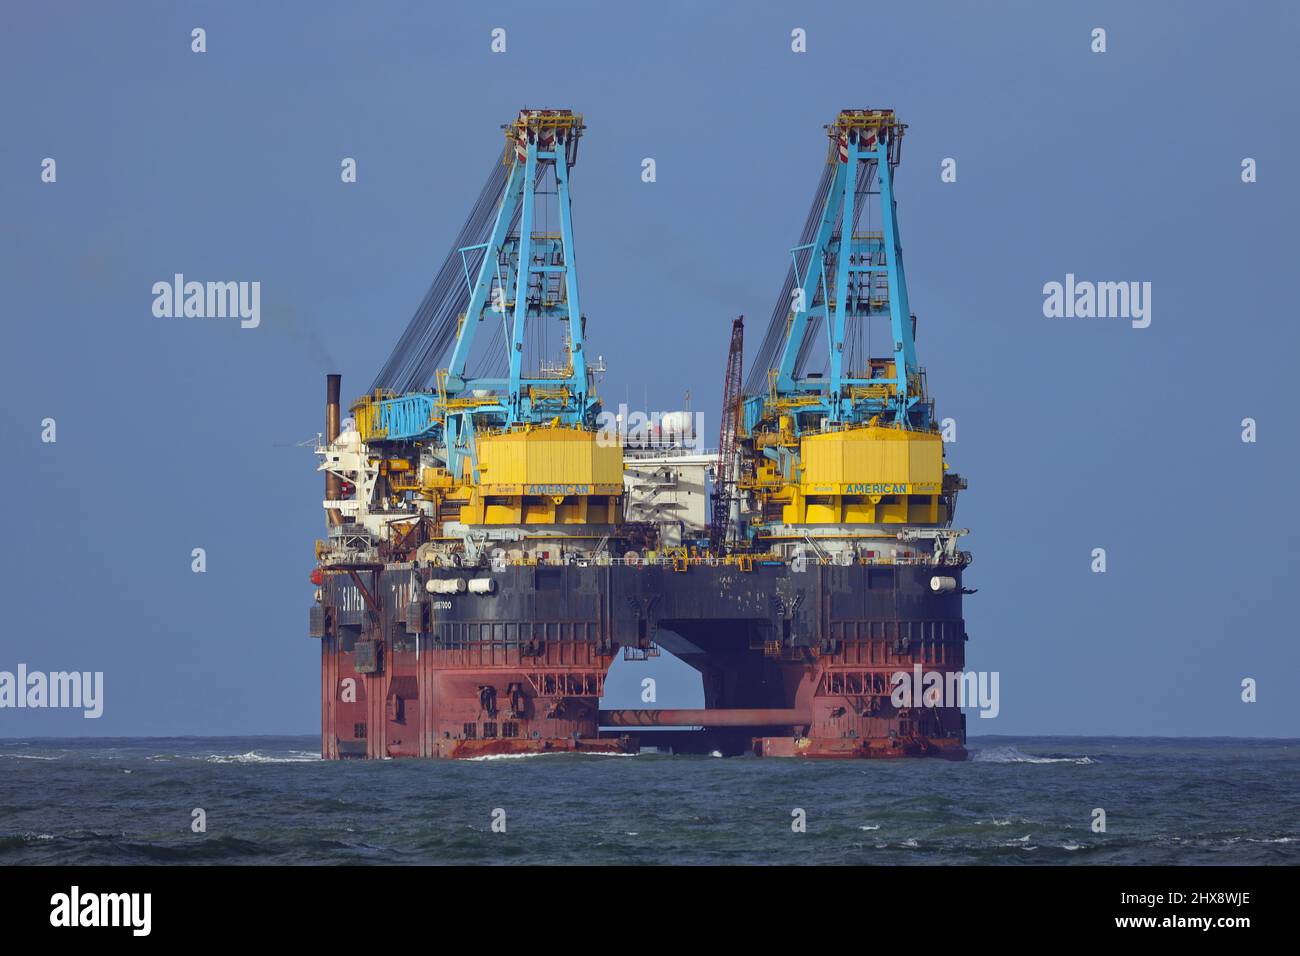 The crane ship Saipem 7000 arrives in the port of Rotterdam on January 30, 2022. Stock Photo